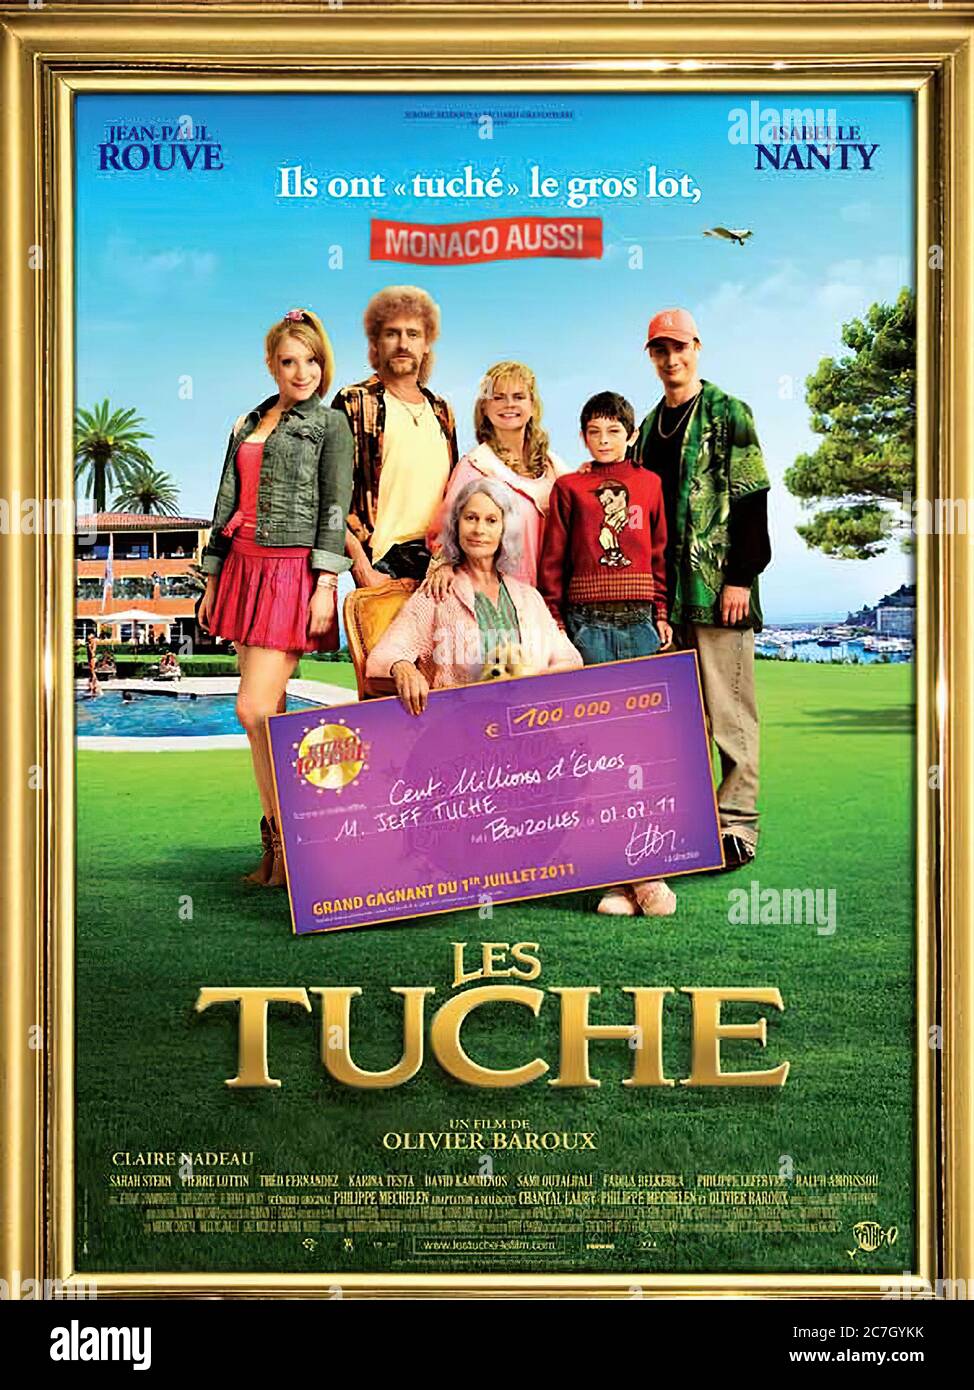 Les Tuche - Movie Poster Stock Photo